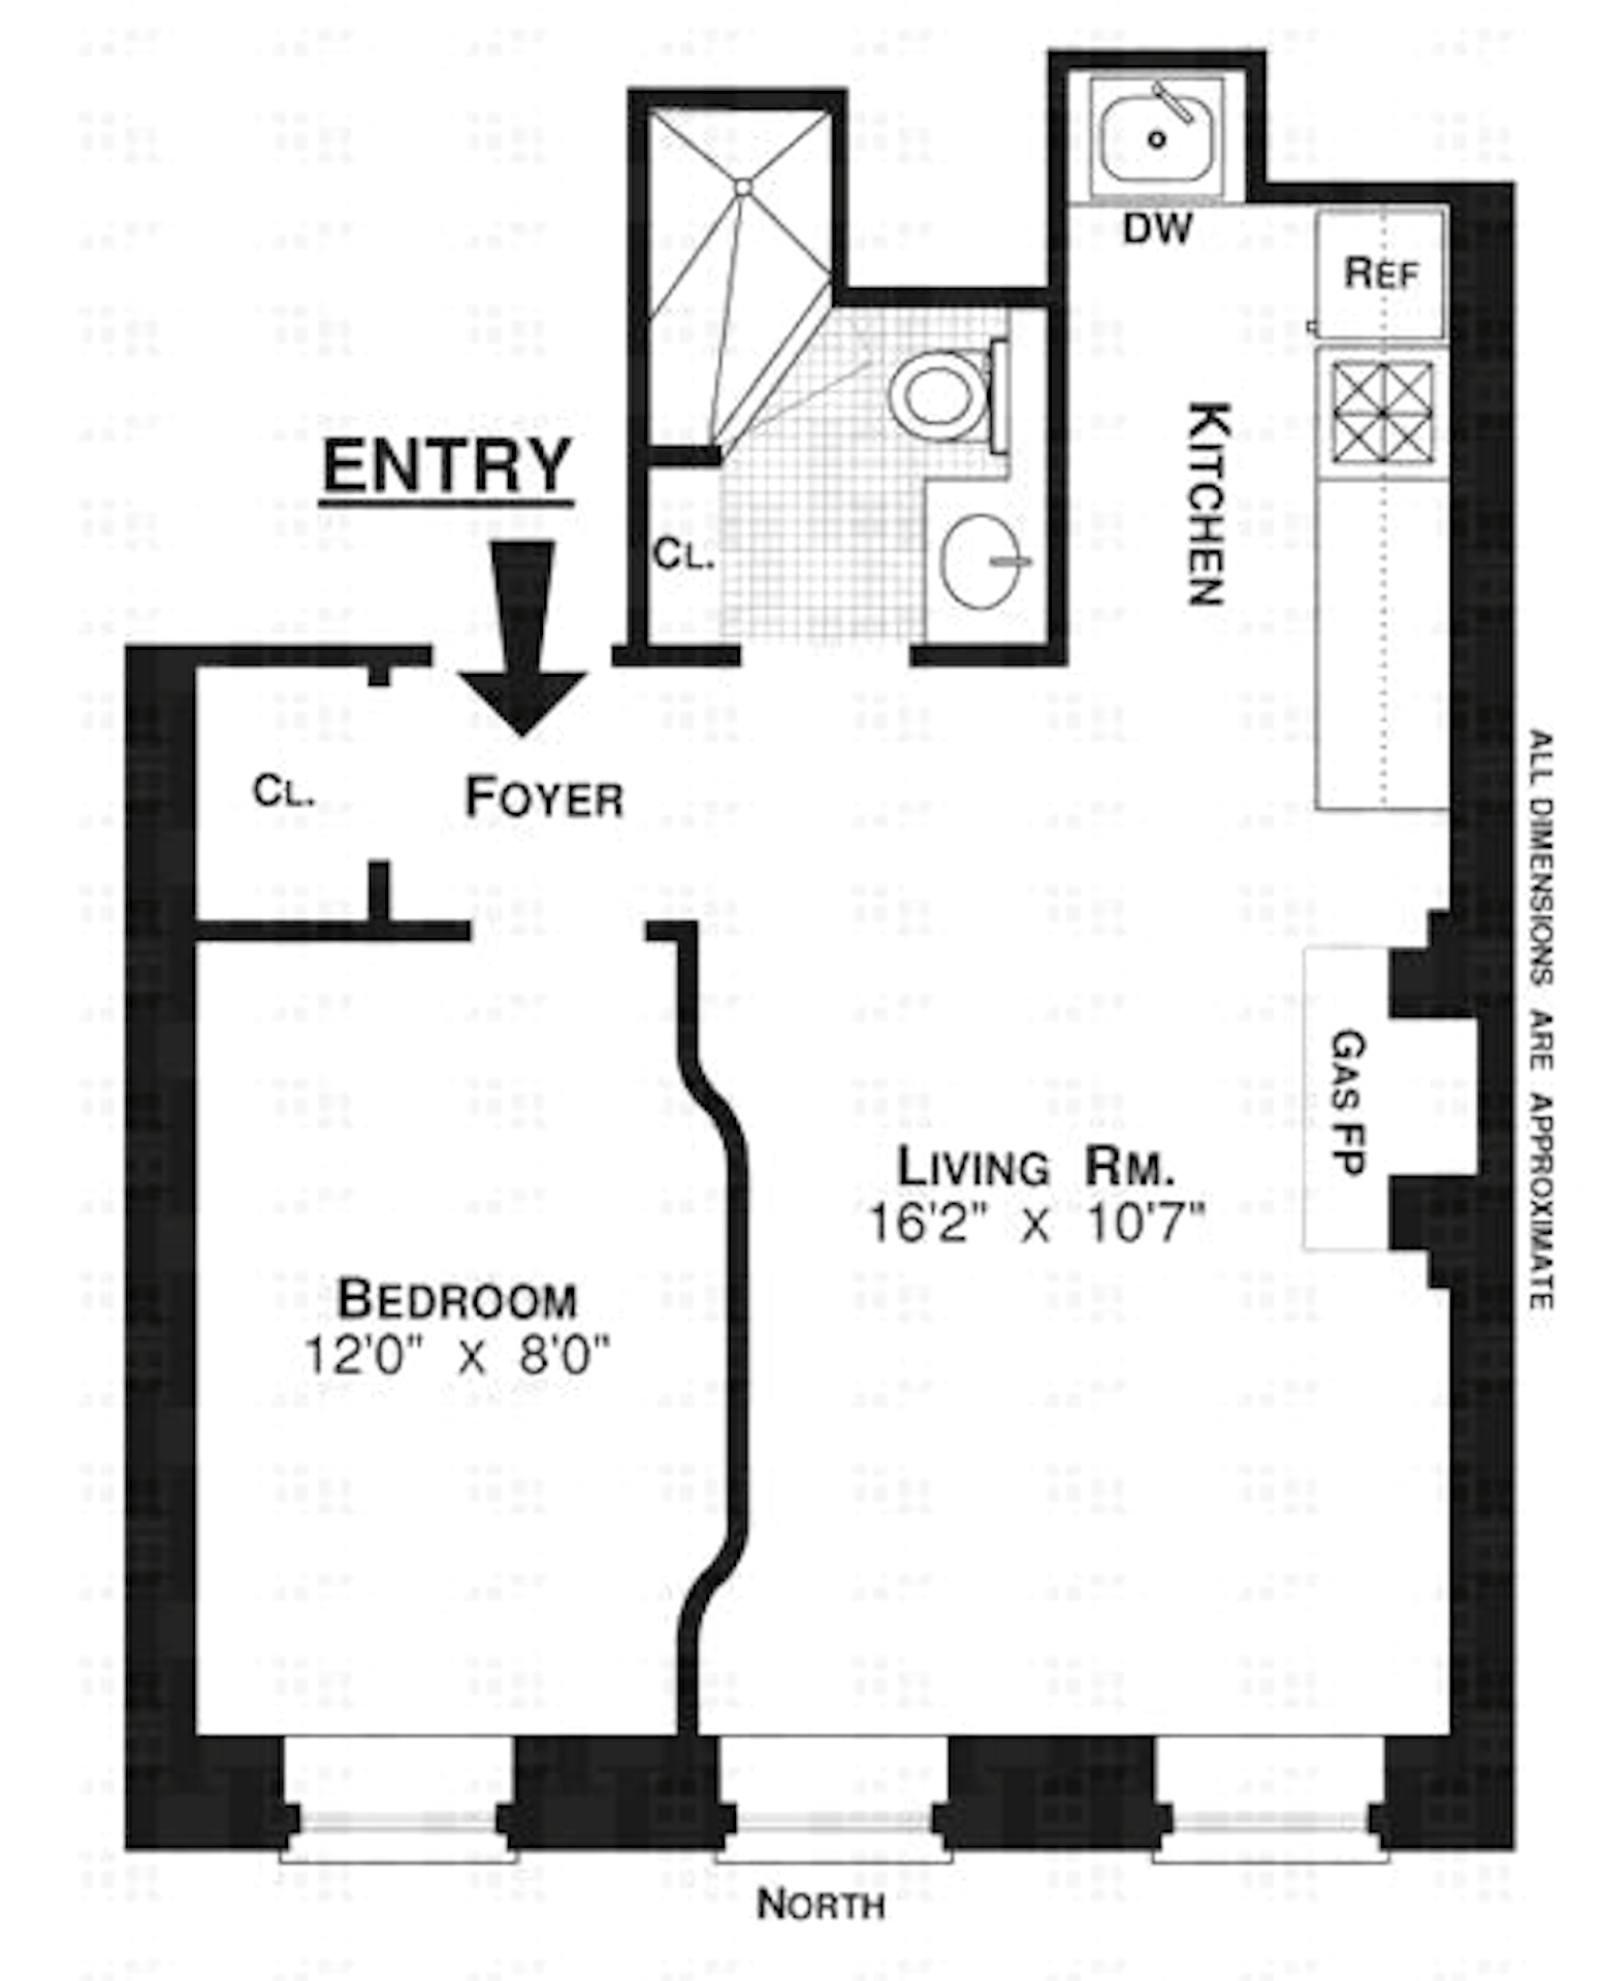 Floorplan for 106 East 60th Street, 4F